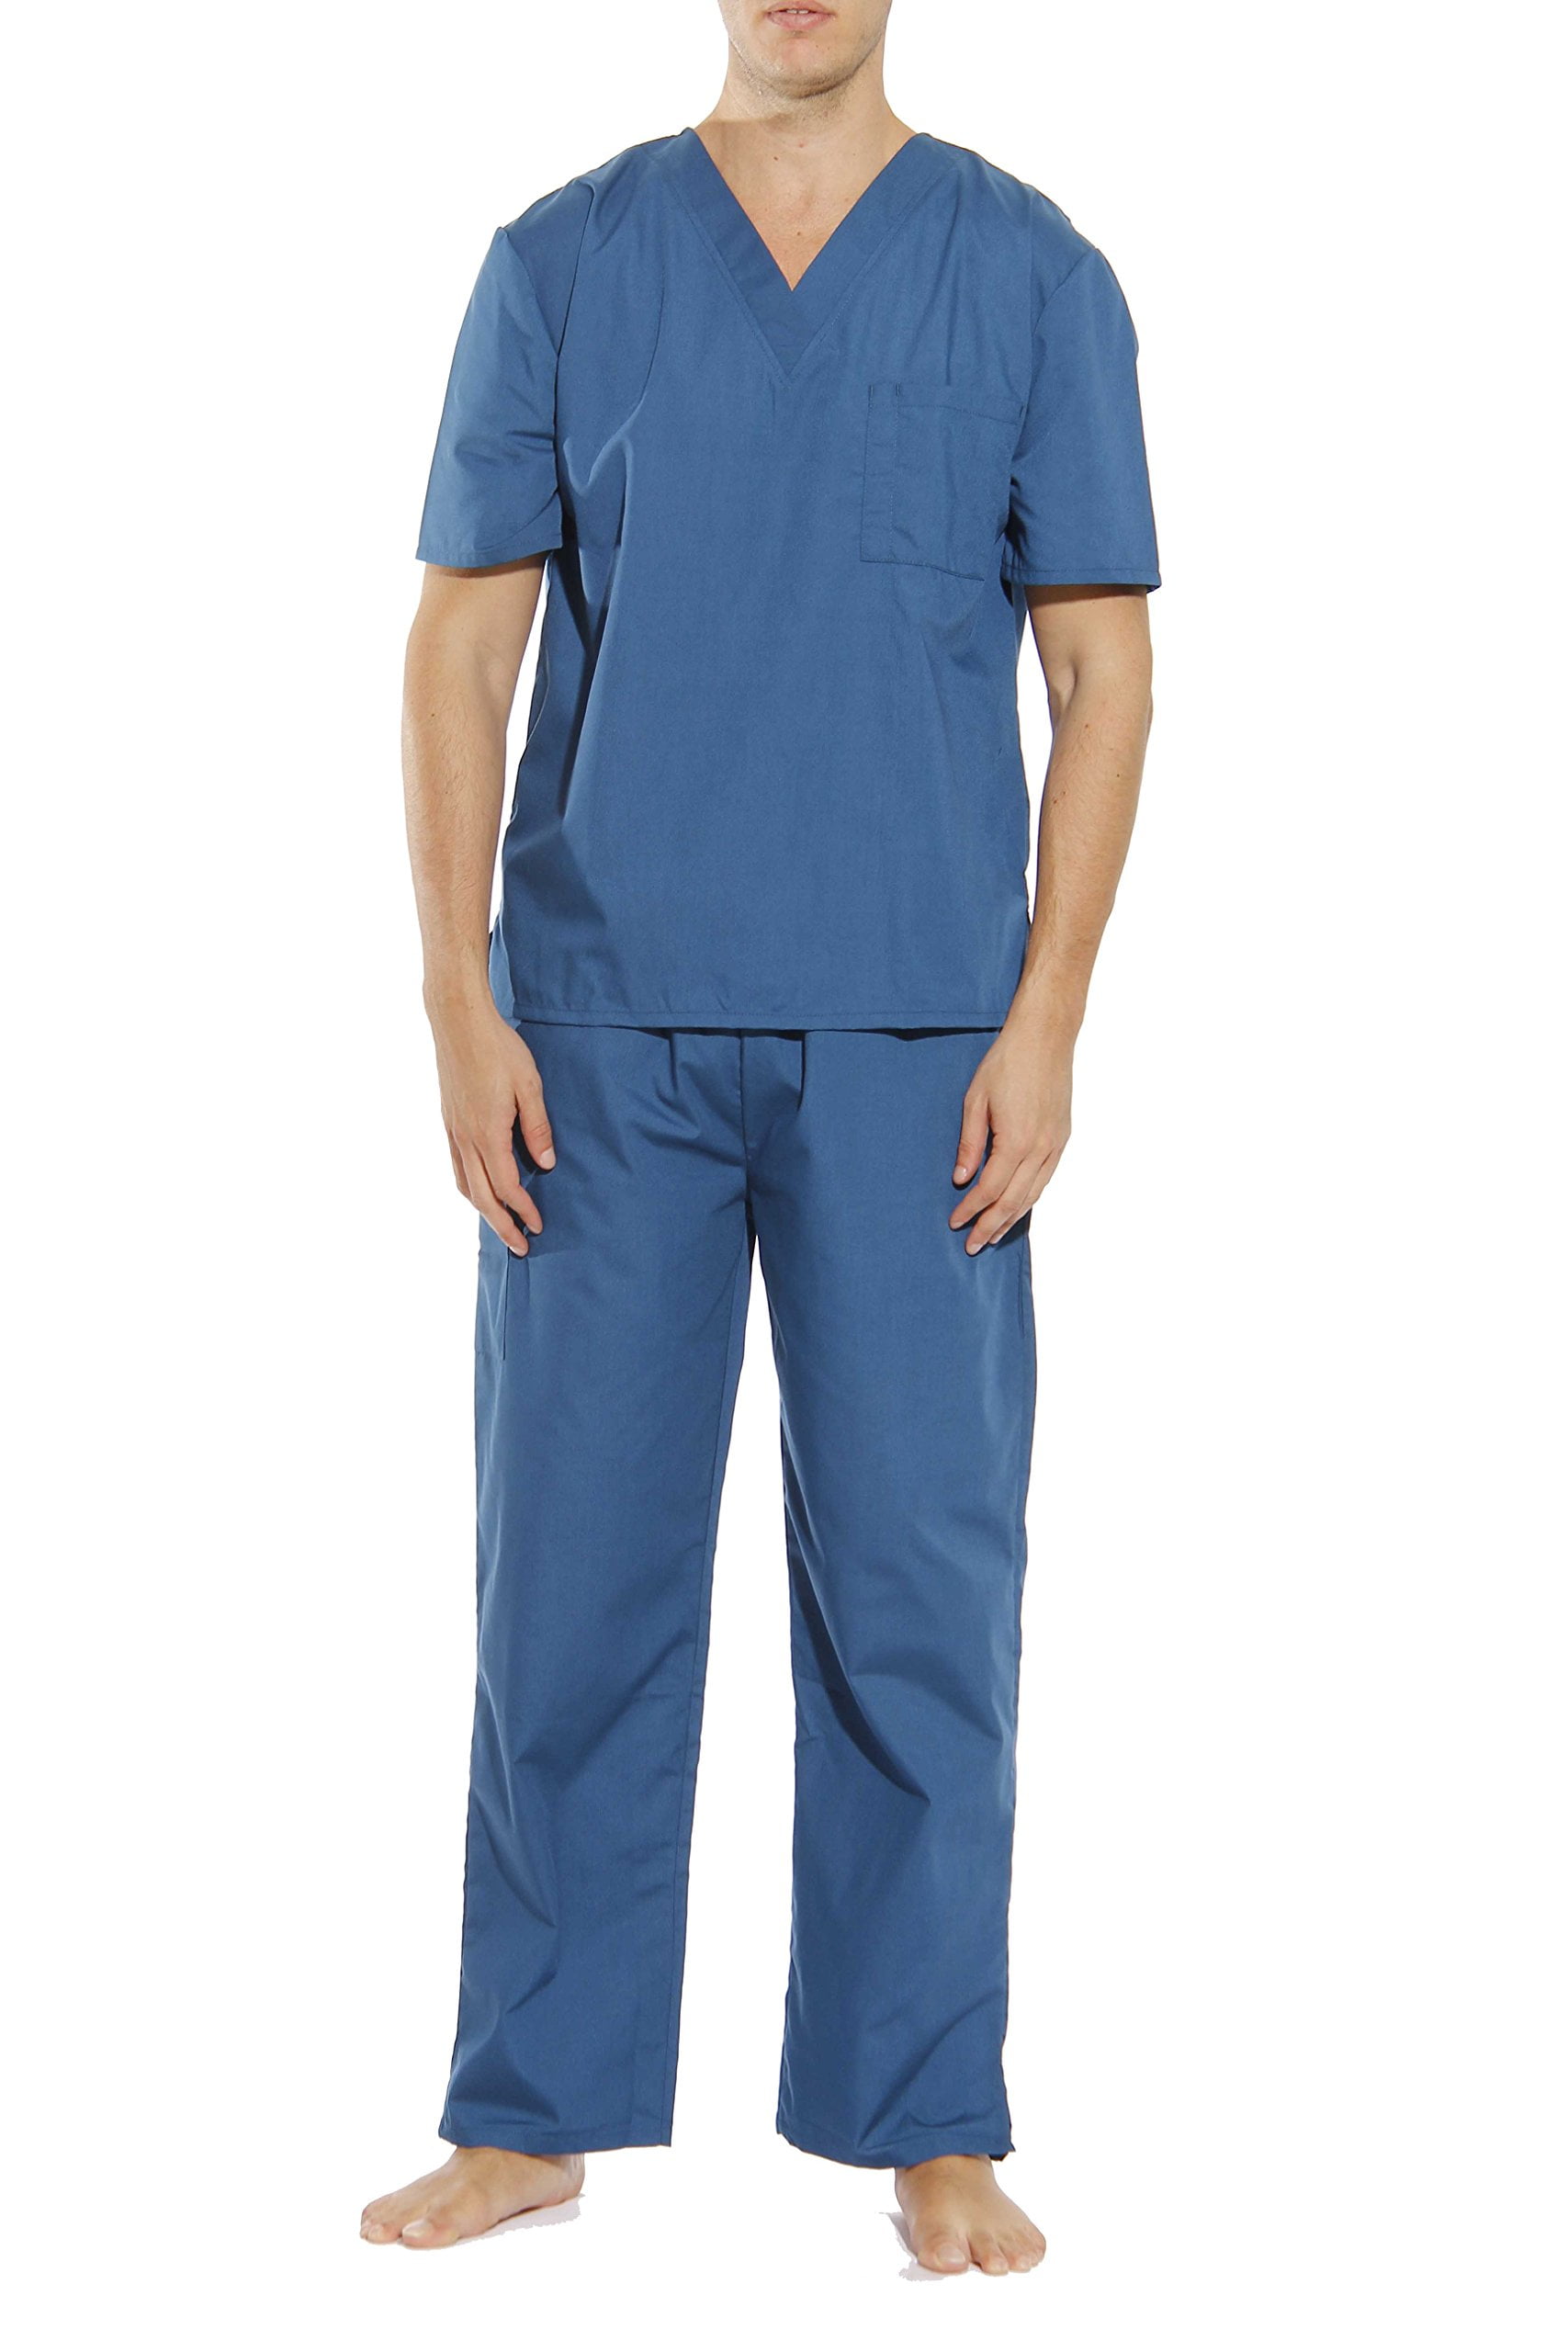 Tropi - Unisex Scrub Sets / Medical Scrubs (V-Neck) (Carribean Blue ...